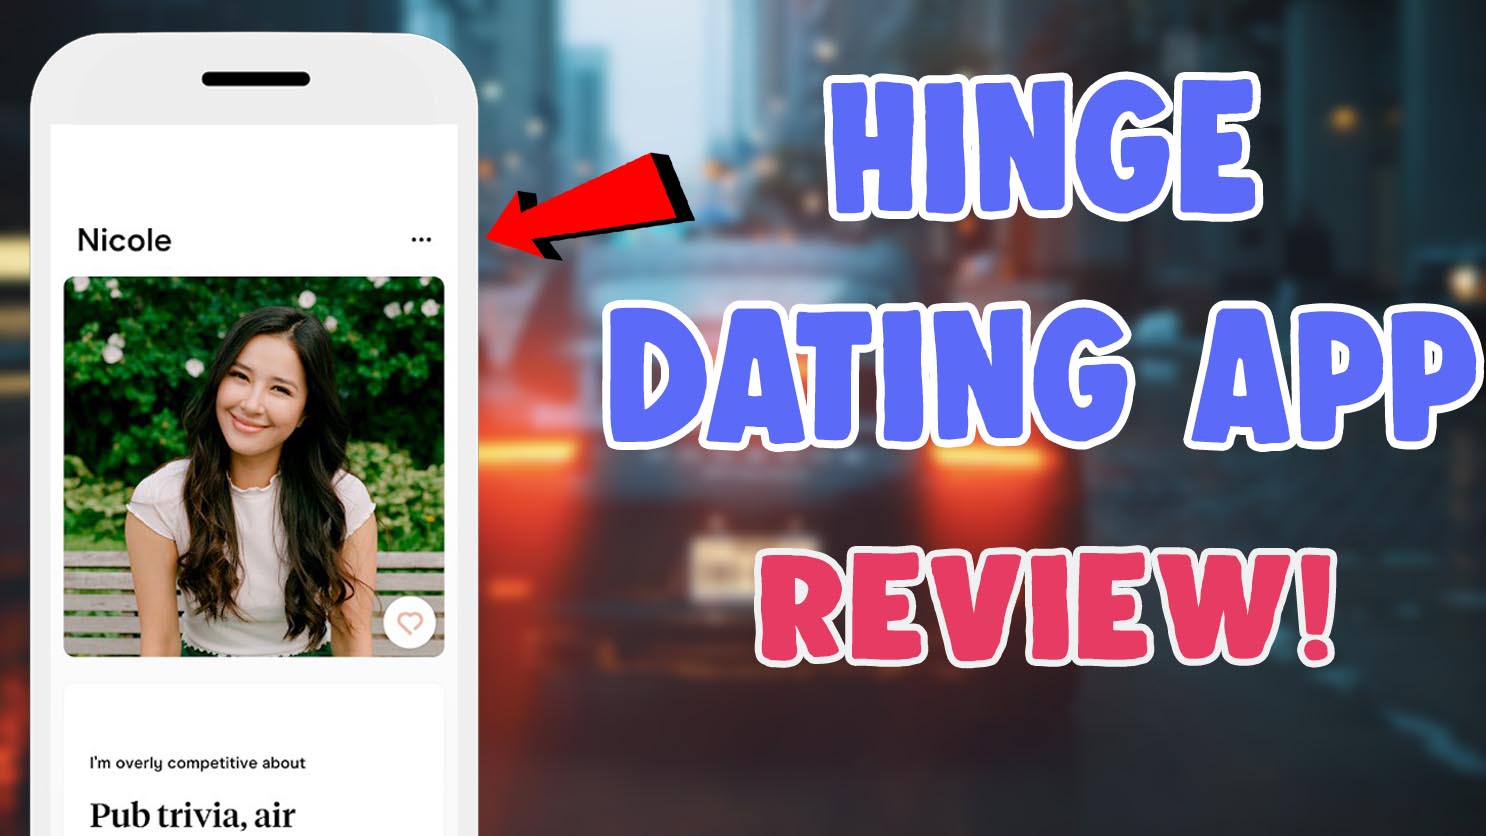 Dating what app hinge is Hinge Dating